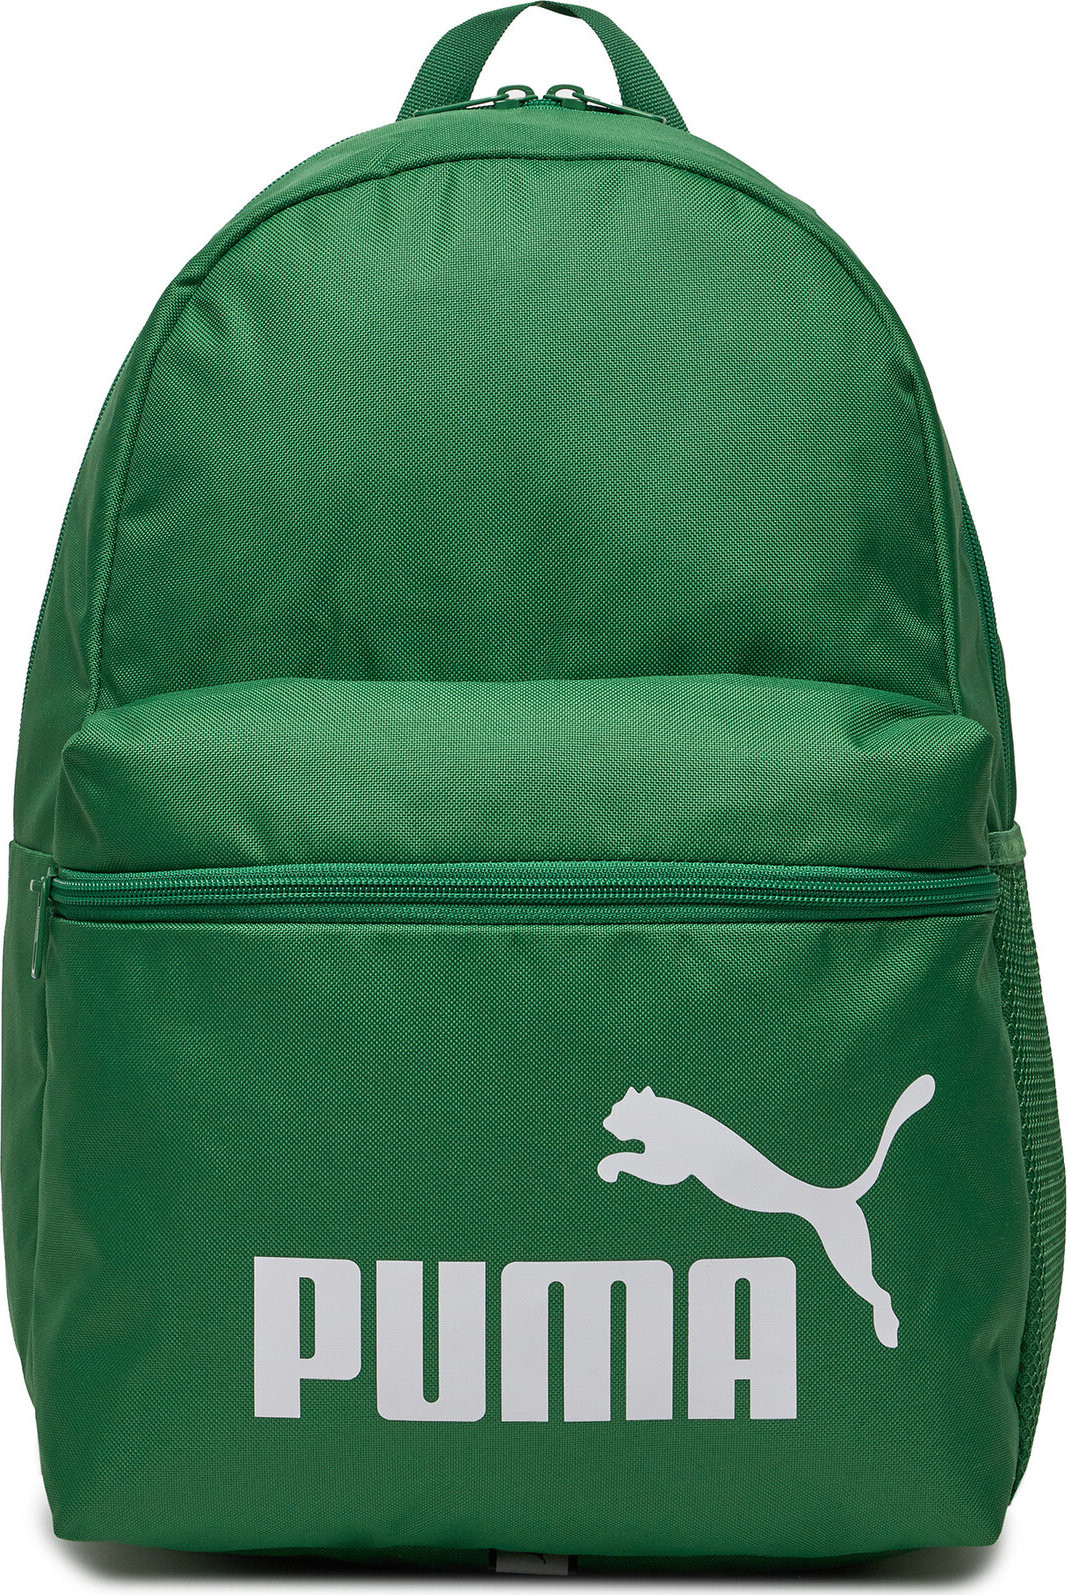 Batoh Puma Phase Backpack 079943 12 Zelená